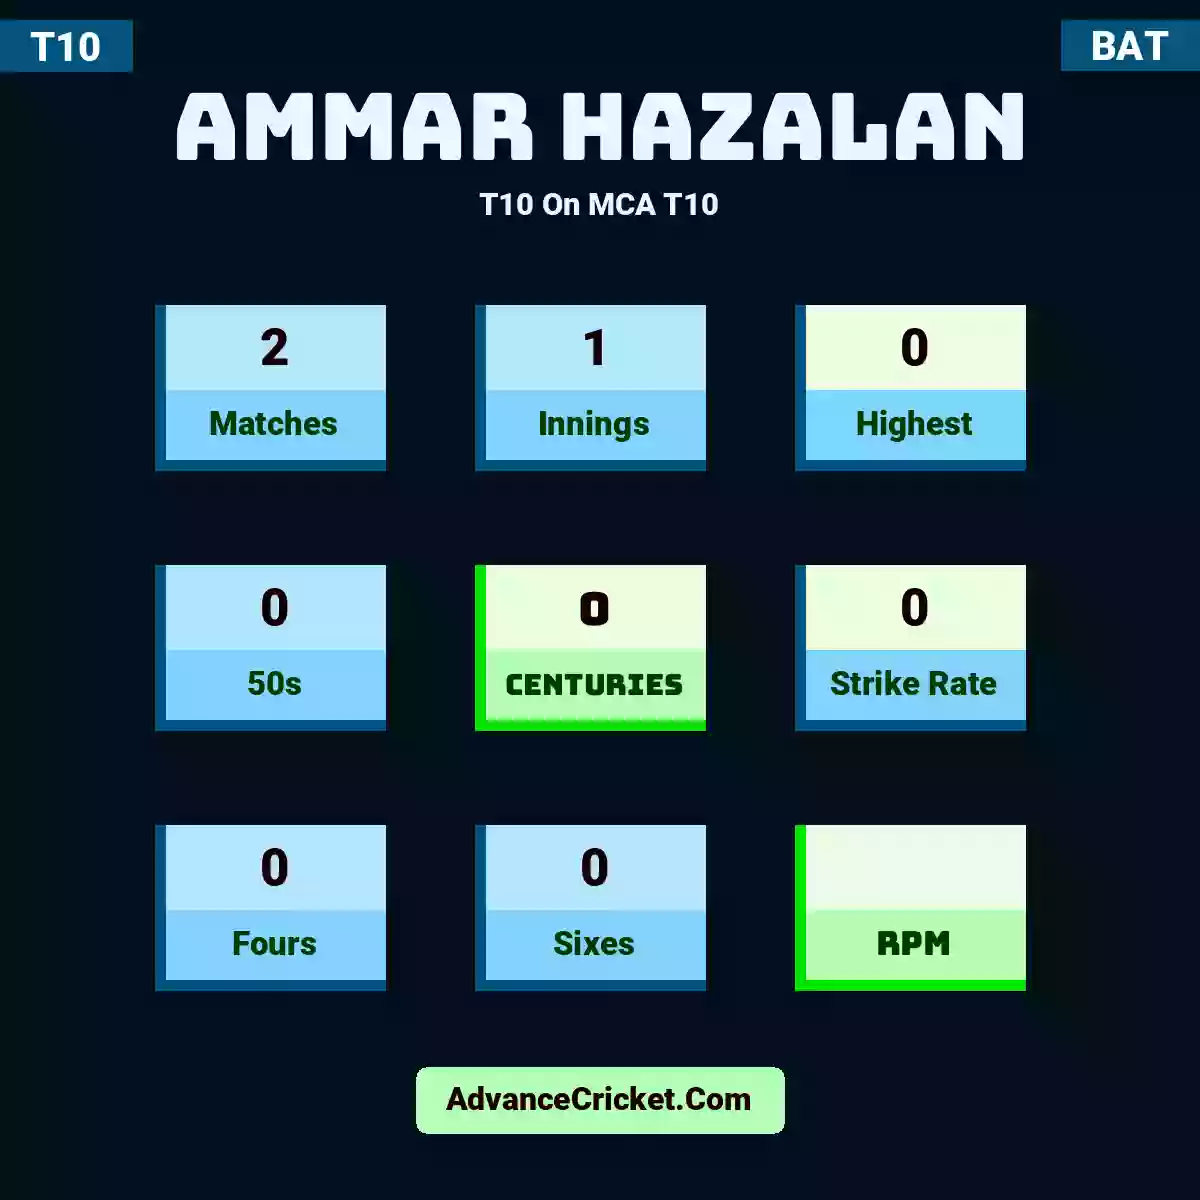 Ammar Hazalan T10  On MCA T10, Ammar Hazalan played 2 matches, scored 0 runs as highest, 0 half-centuries, and 0 centuries, with a strike rate of 0. A.Hazalan hit 0 fours and 0 sixes.